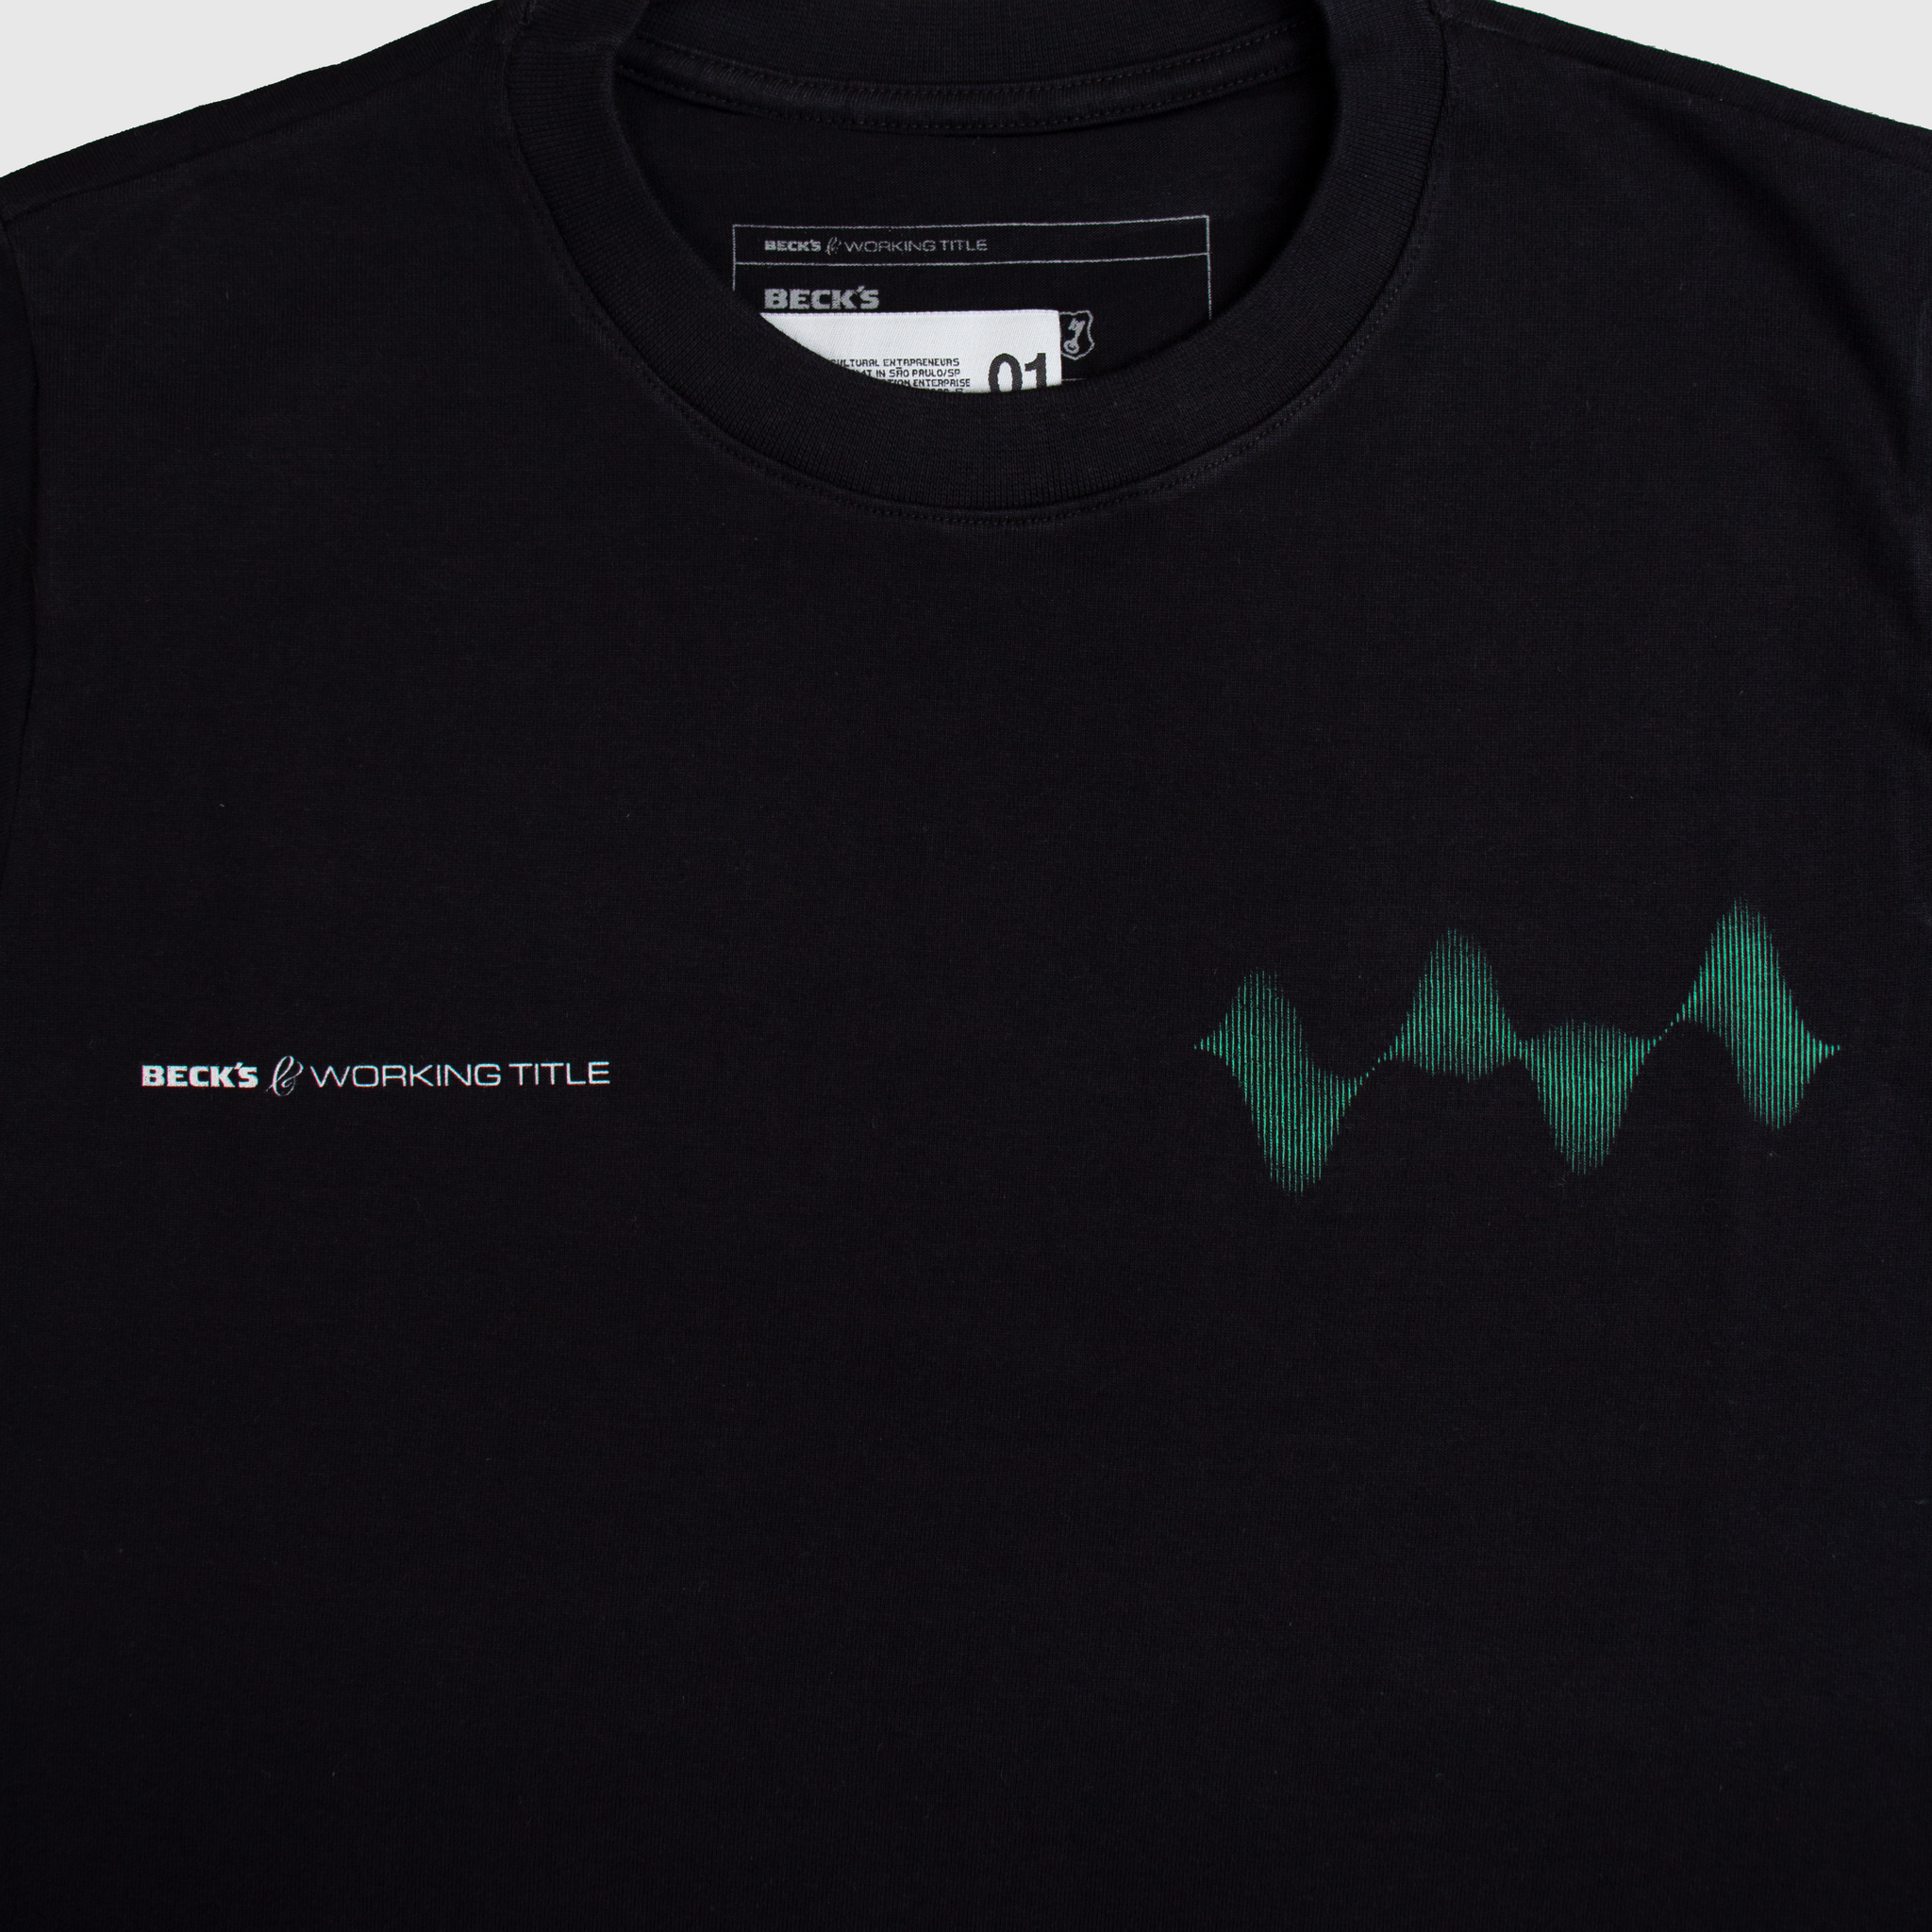 BECK'S x WORKING TITLE Camiseta Sound - Black